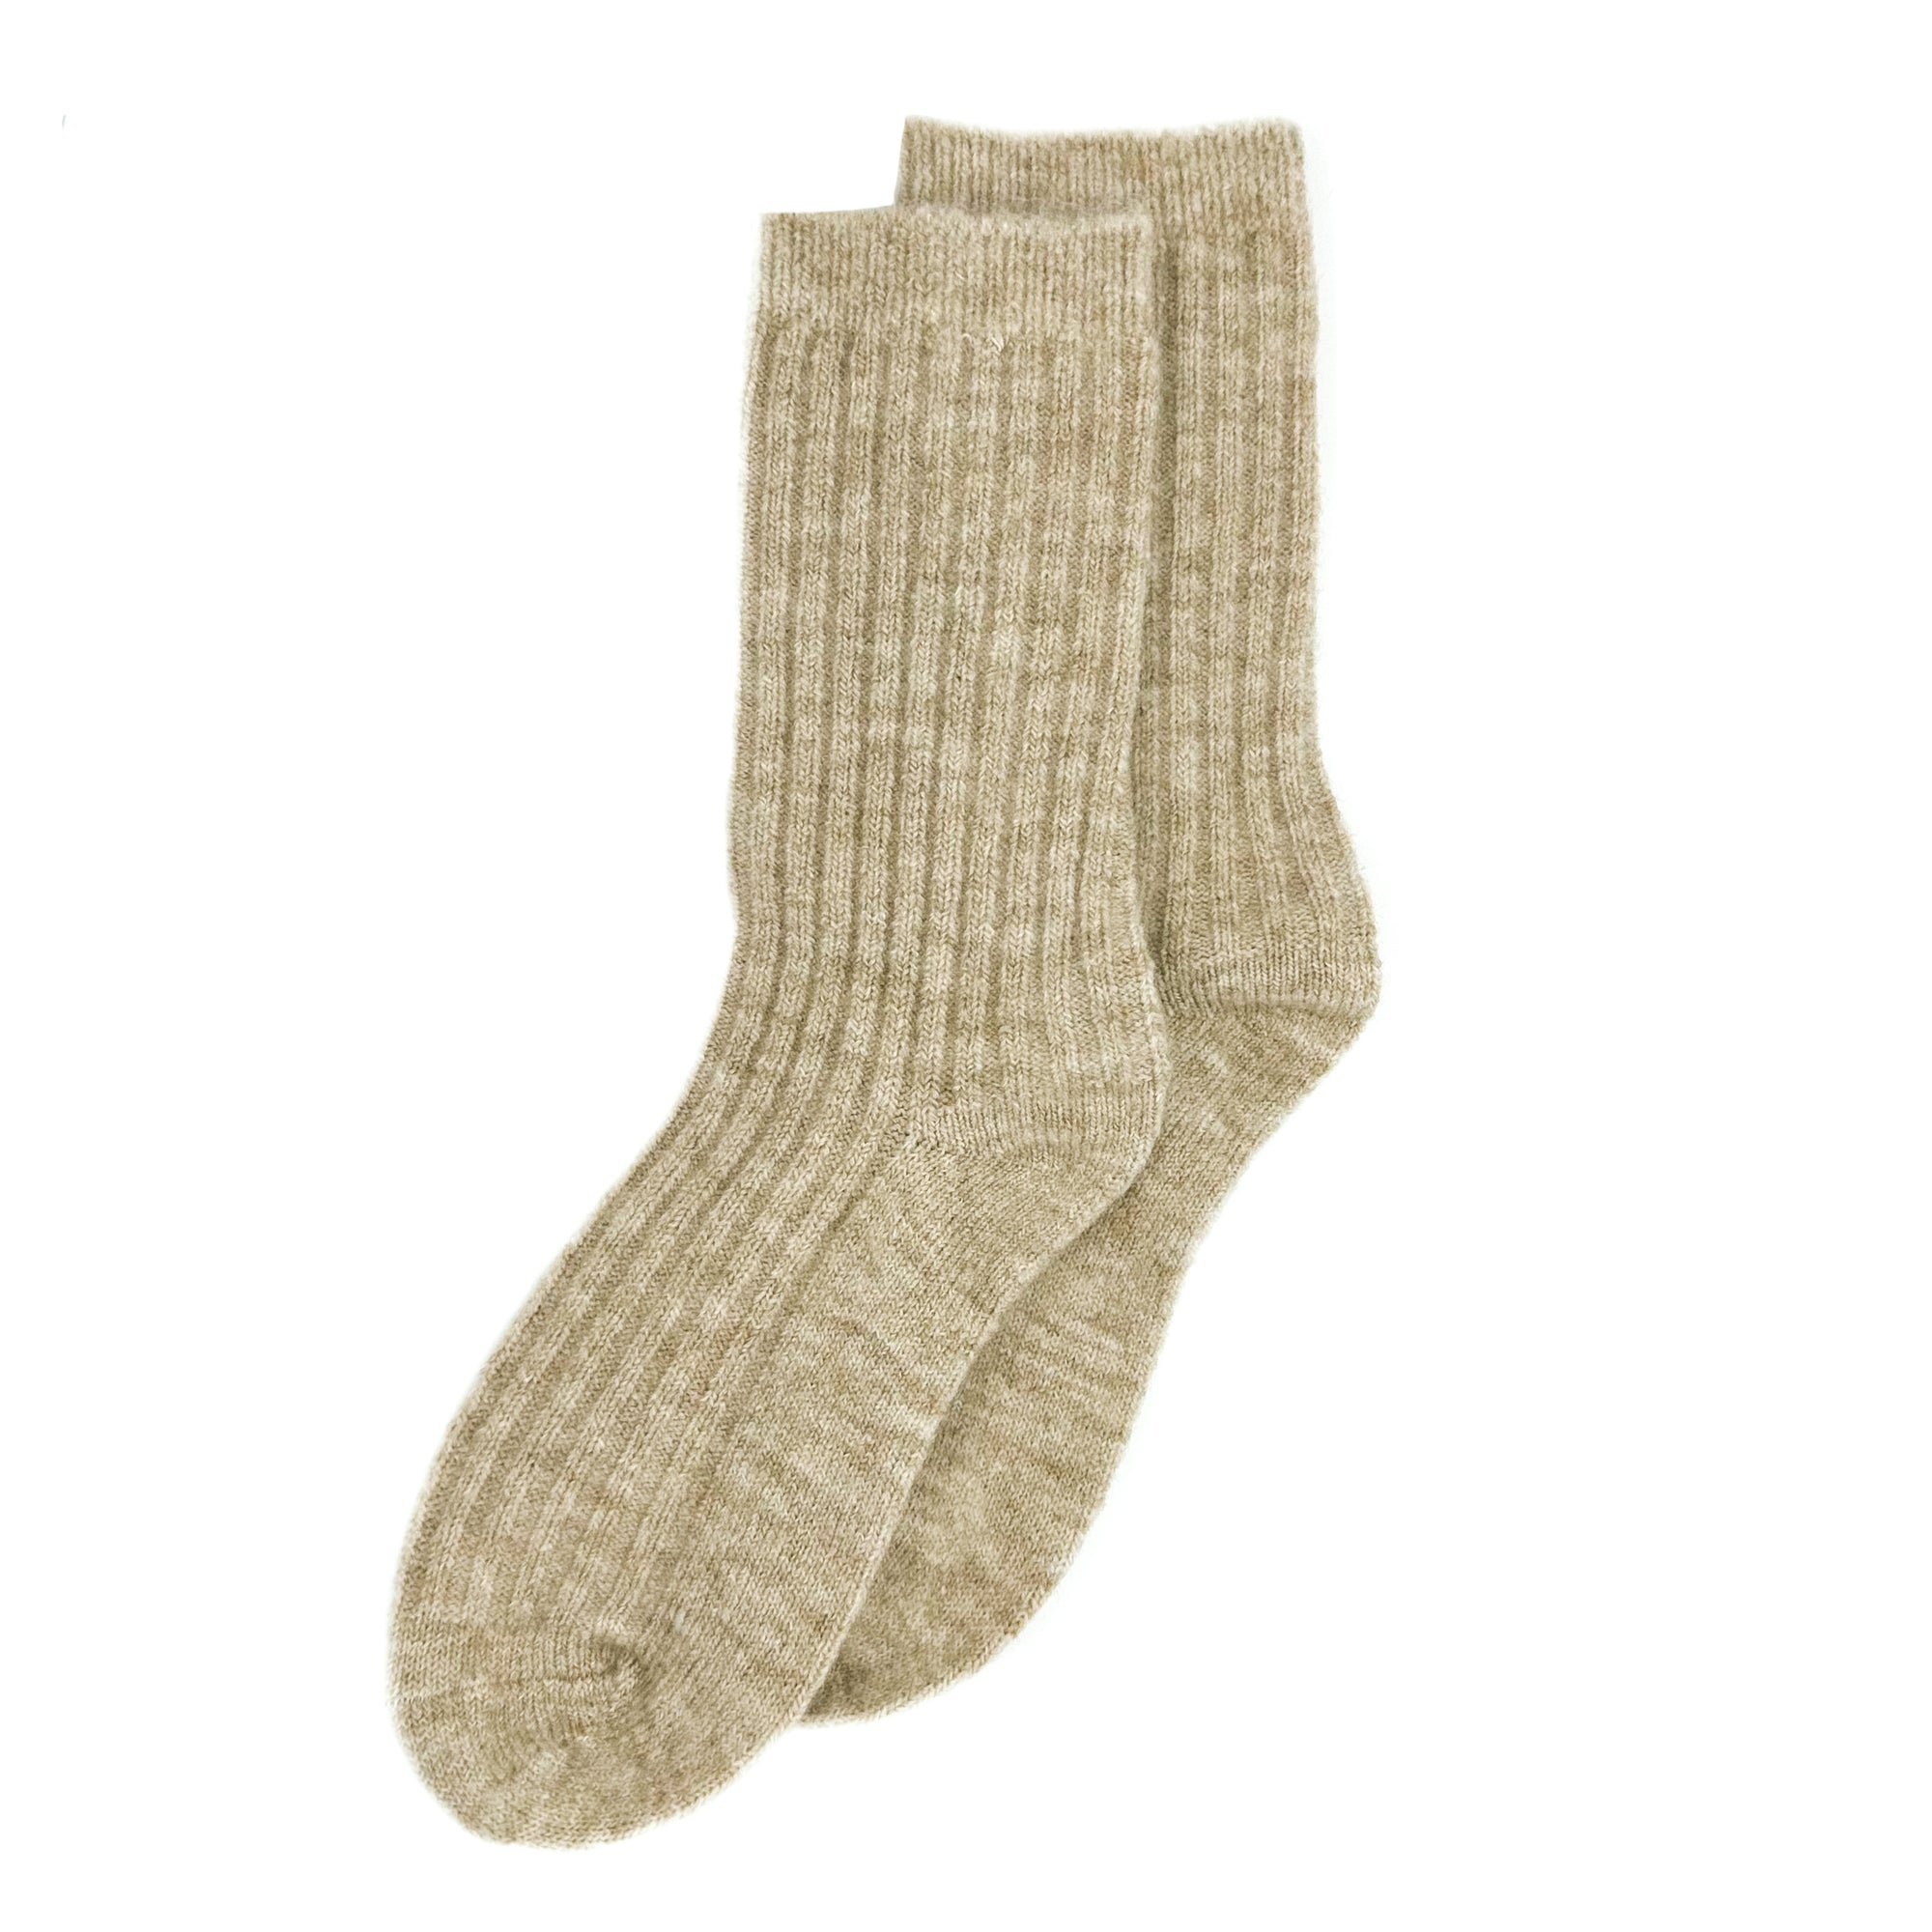 Busy Socks Cozy Wool Cabin Socks for Women, Mens Ankle Athletic